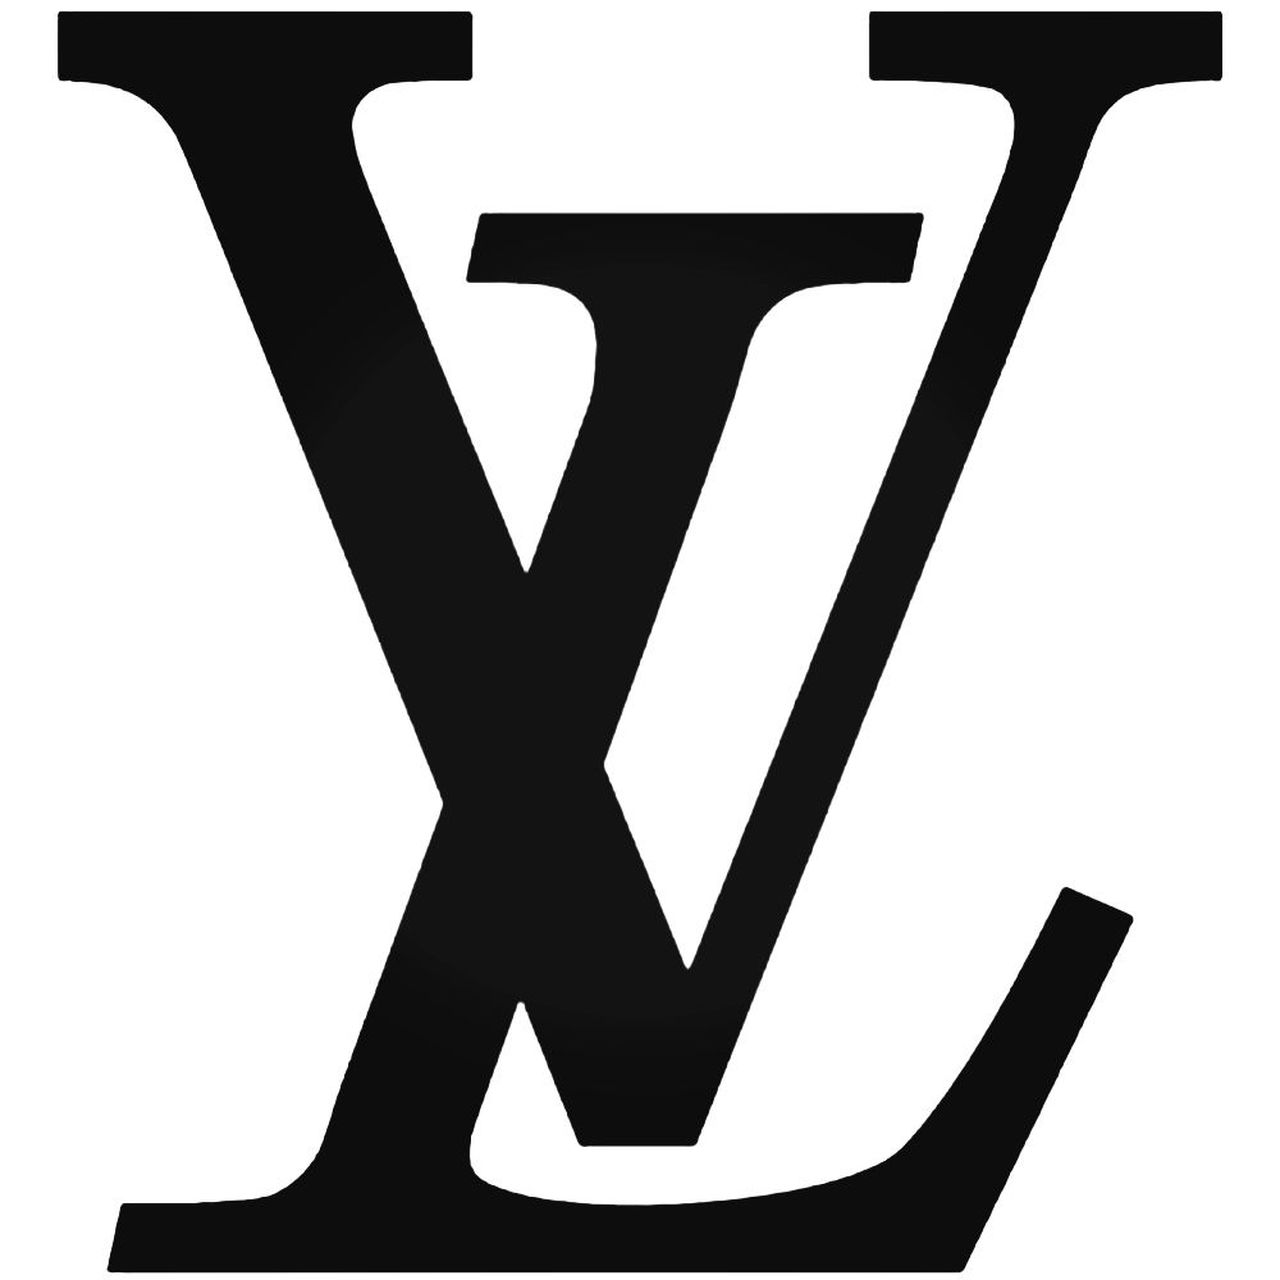 "LV Necklace" Trademark Infringement Dispute Case